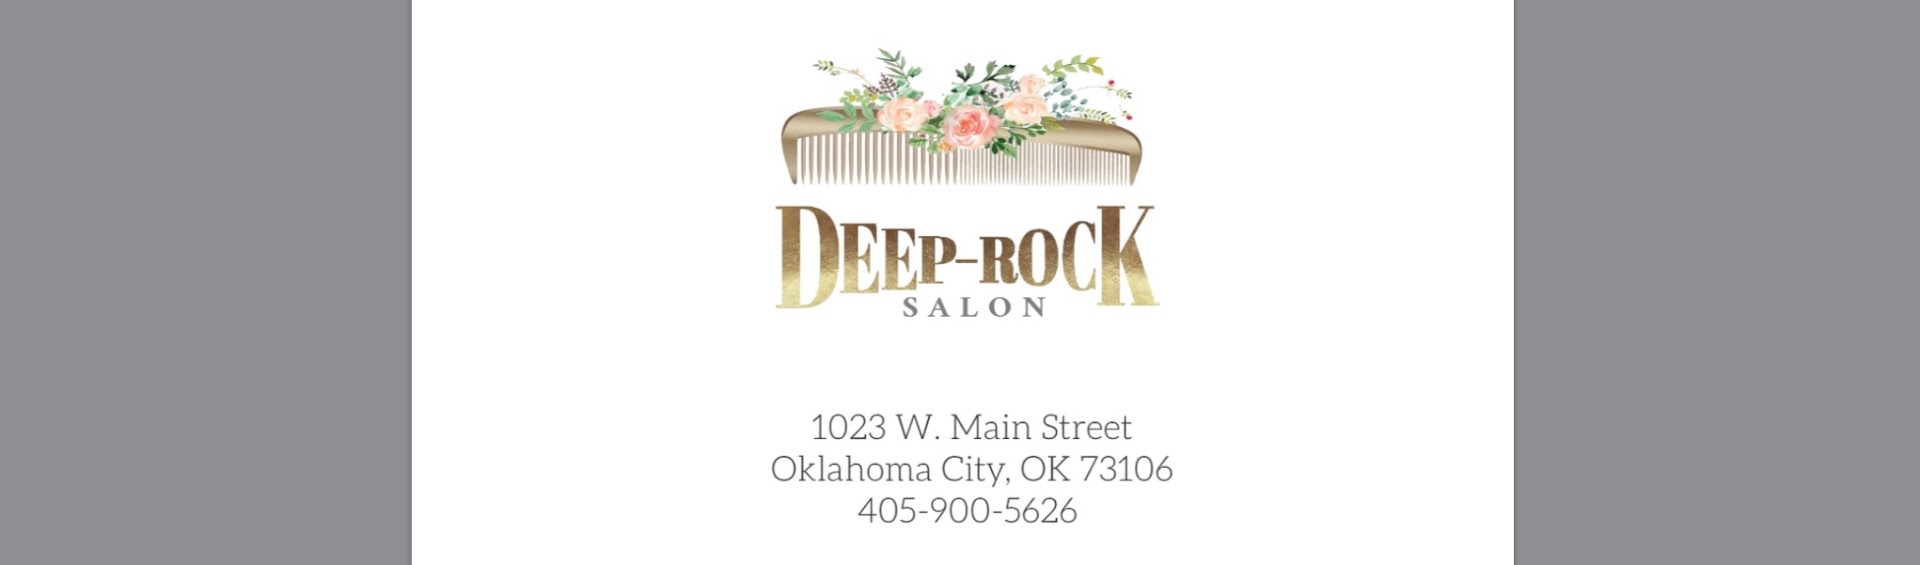 Deep-Rock Salon